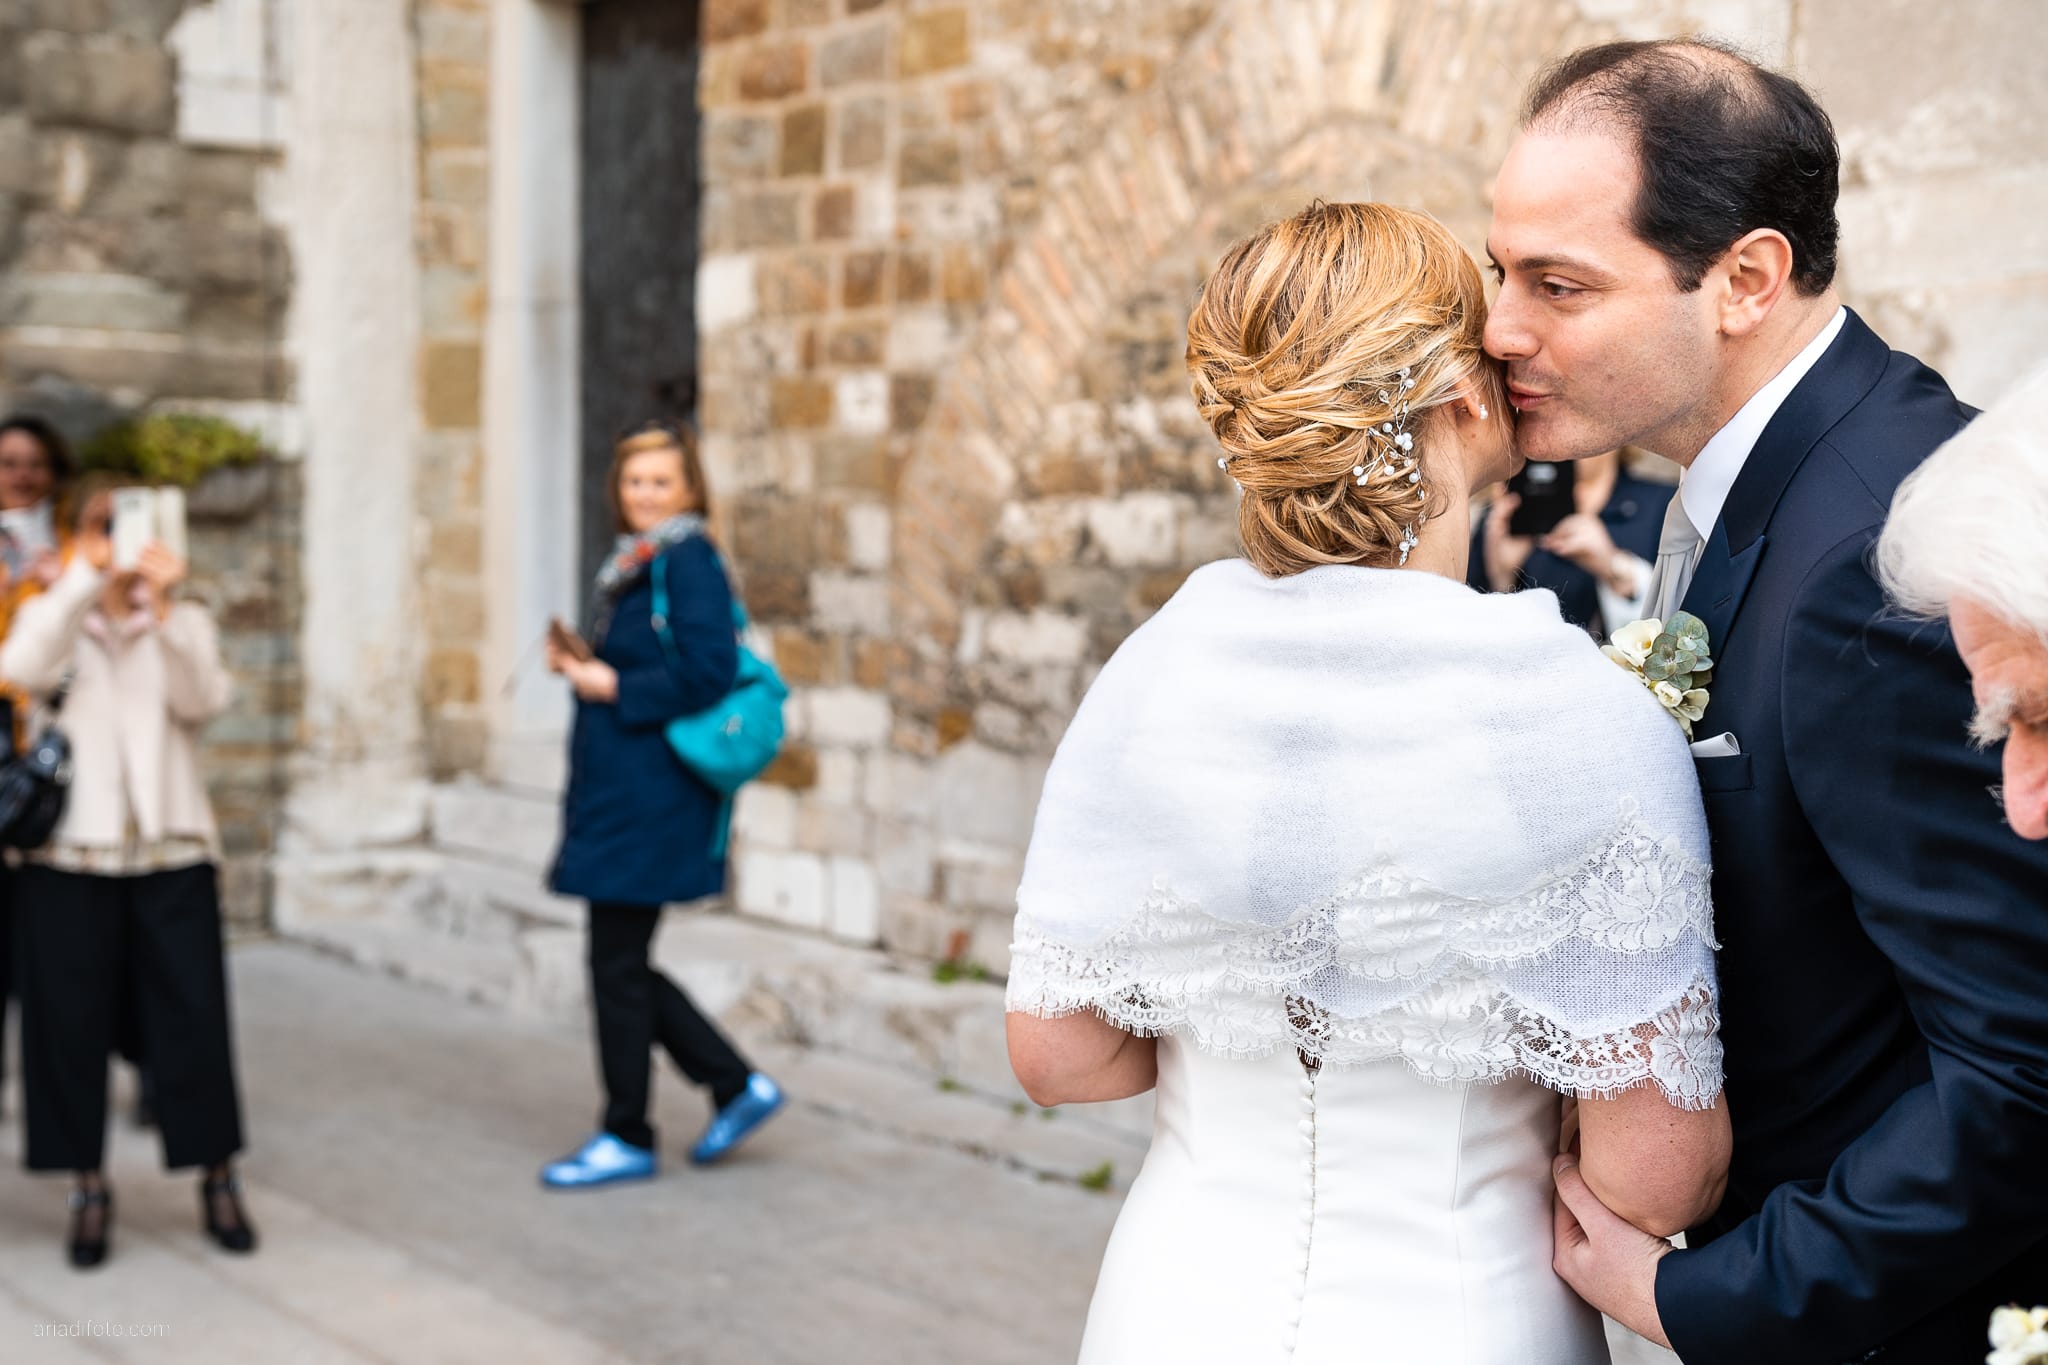 Elena Guido Matrimonio elegante Savoia Excelsior Palace Trieste cerimonia Cattedrale San Giusto sposo saluta sposa